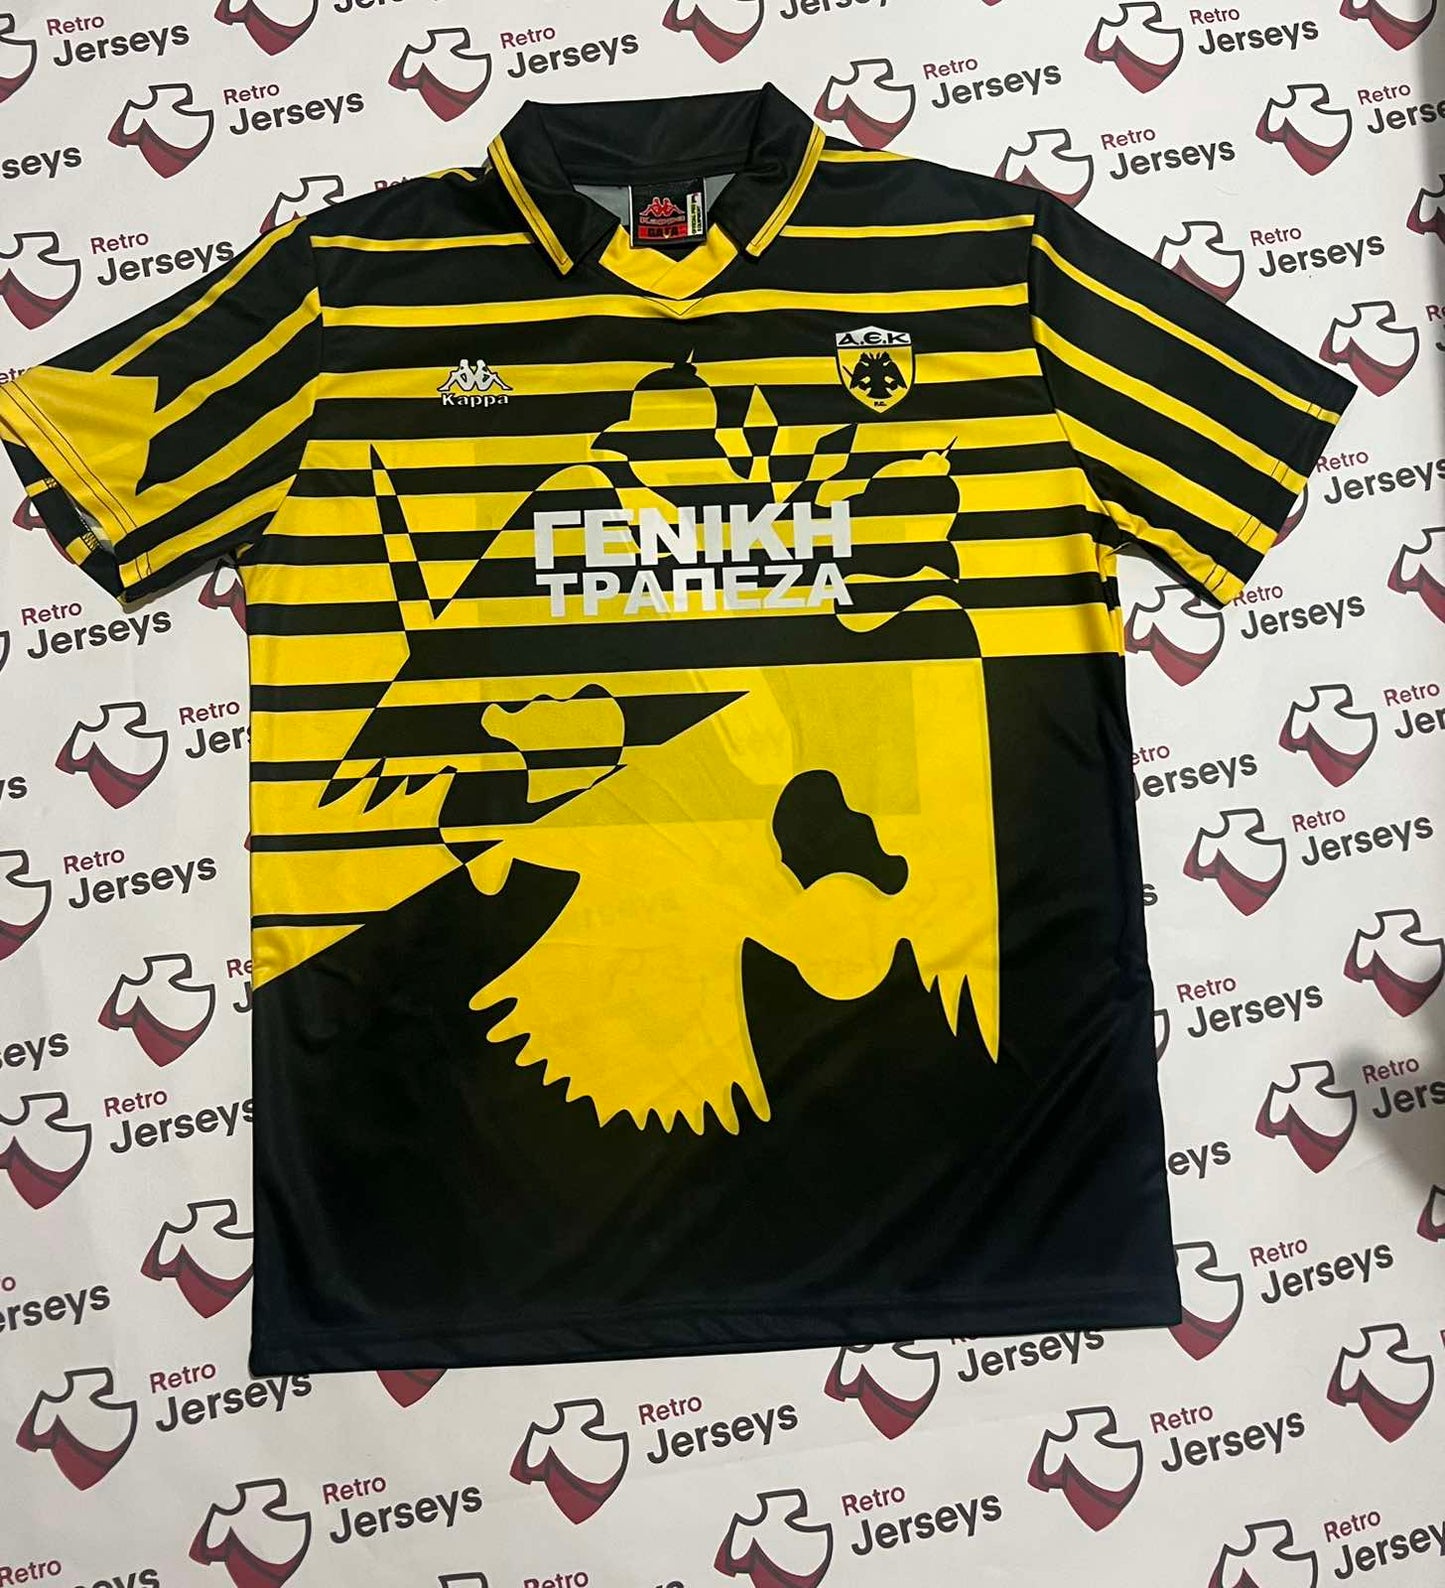 AEK Athens Shirt 1996-1997 Home - Retro Jerseys, φανέλα αεκ - Retro Jerseys